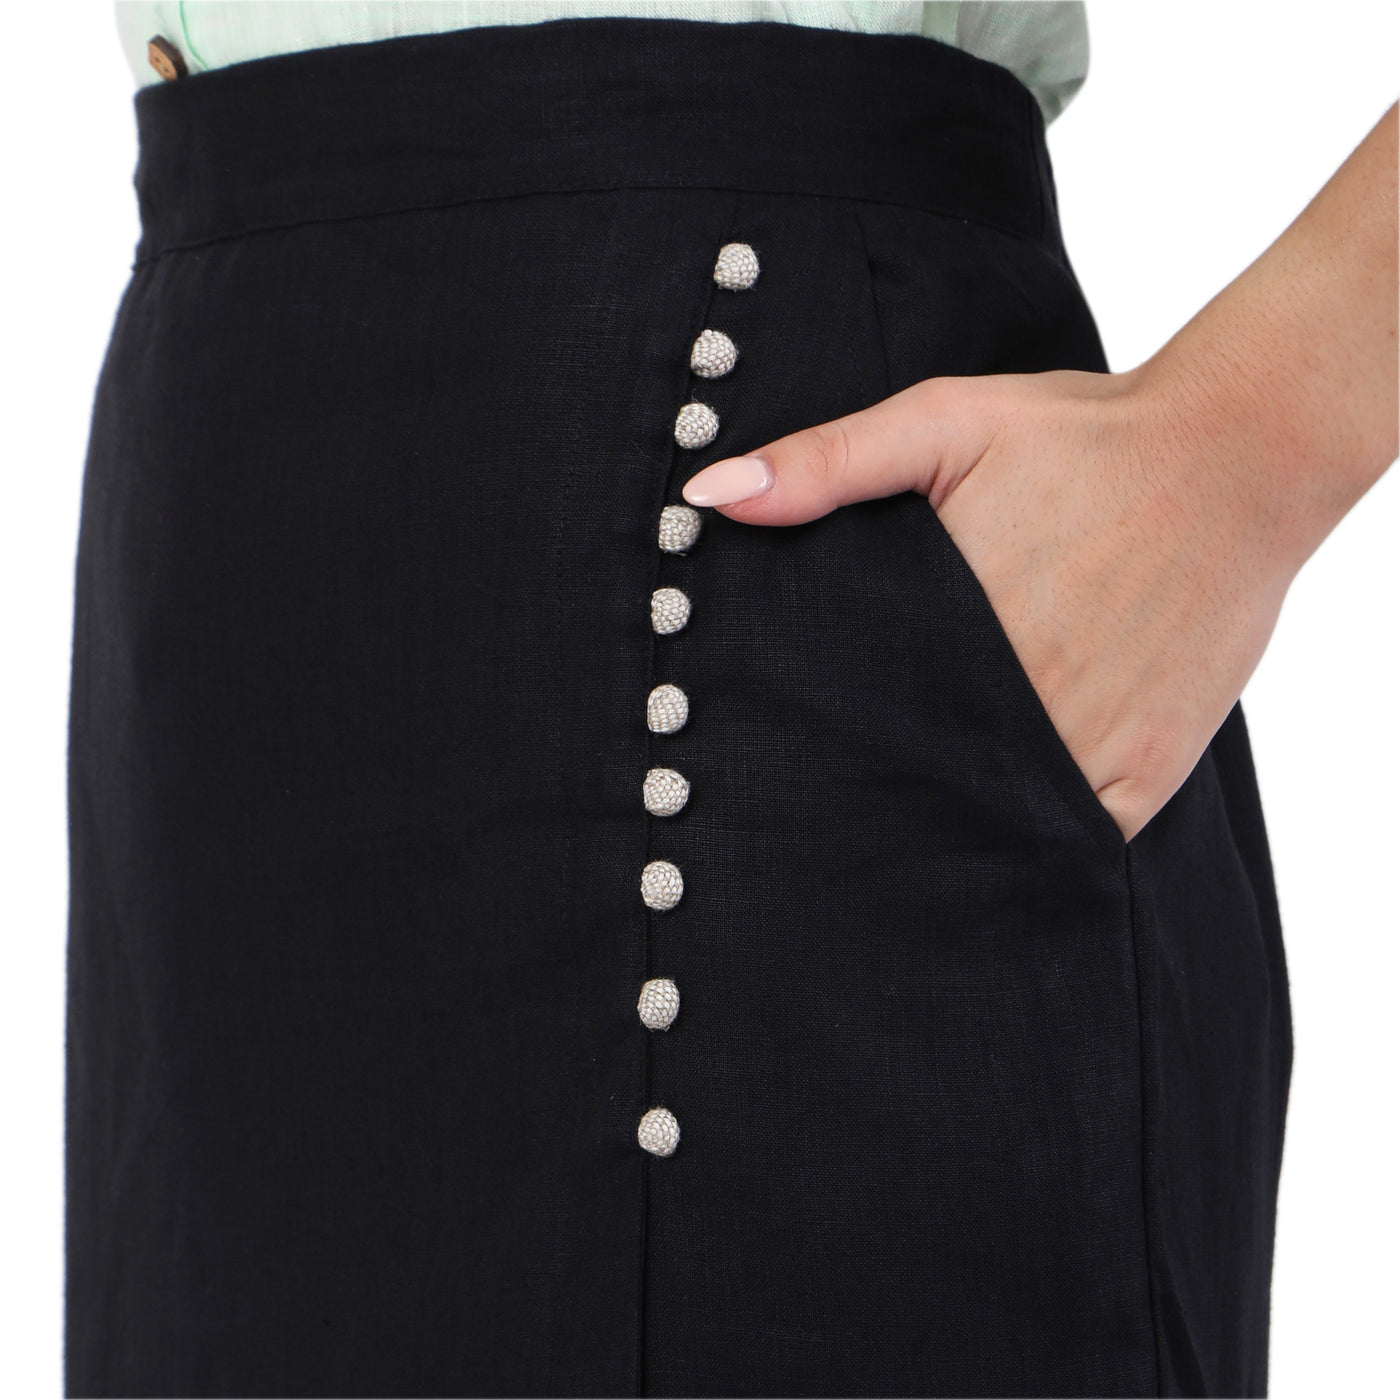 Women's Hemp A-Line Black Skirt